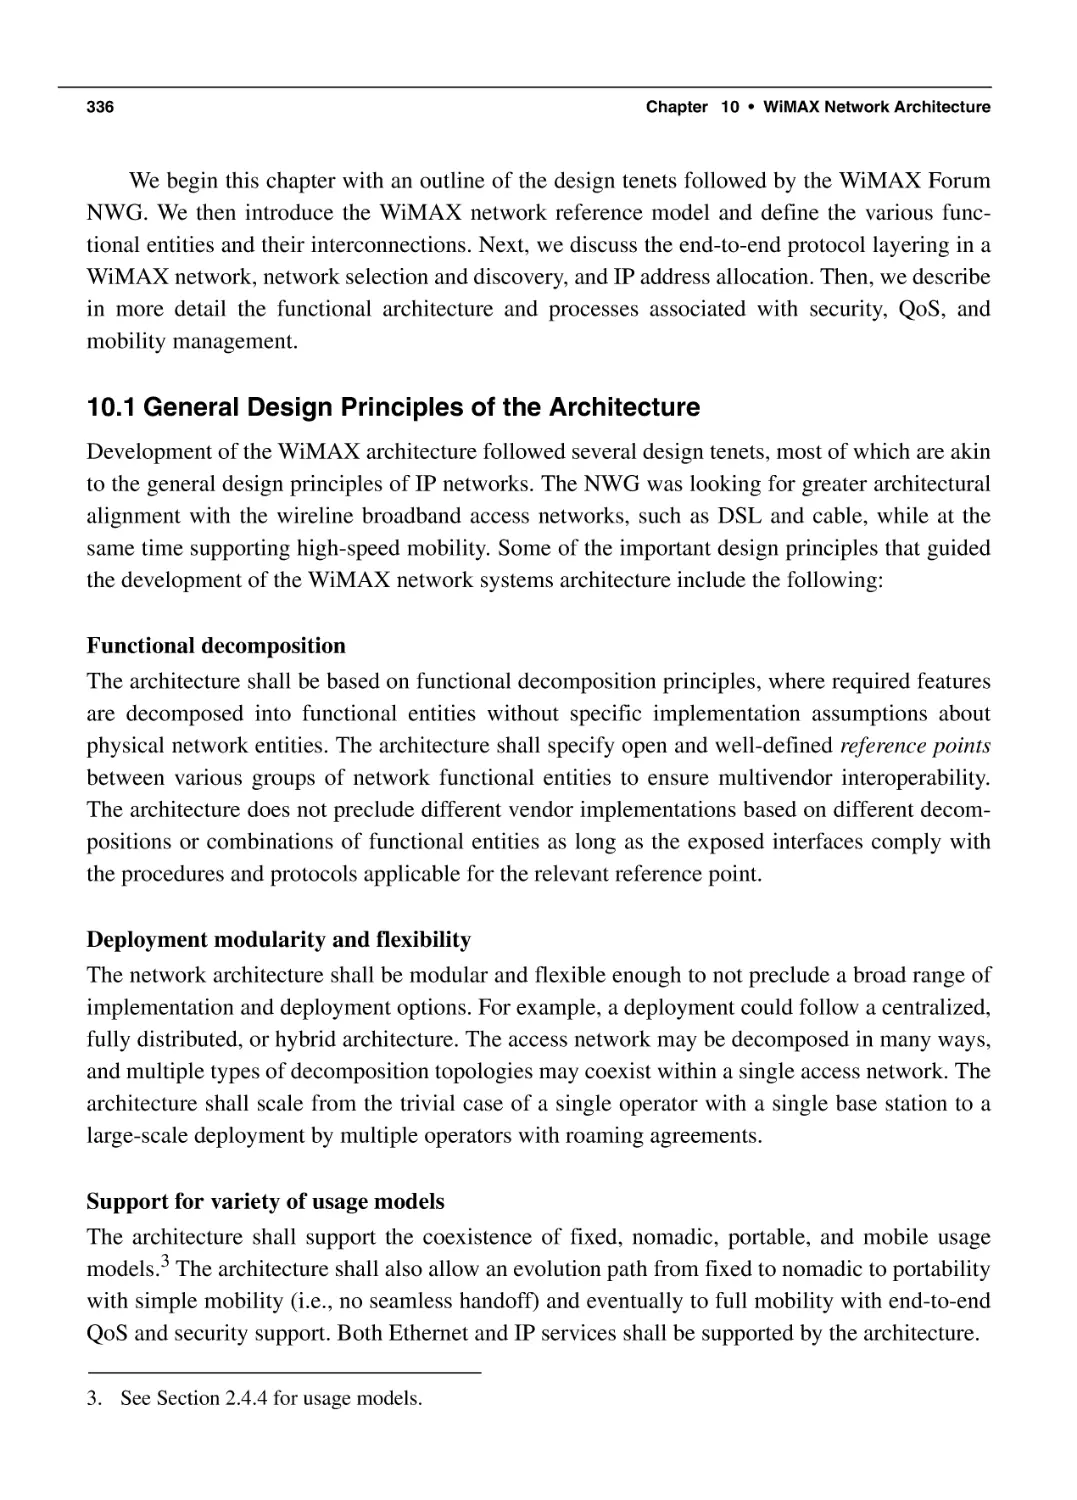 10.1 General Design Principles of the Architecture